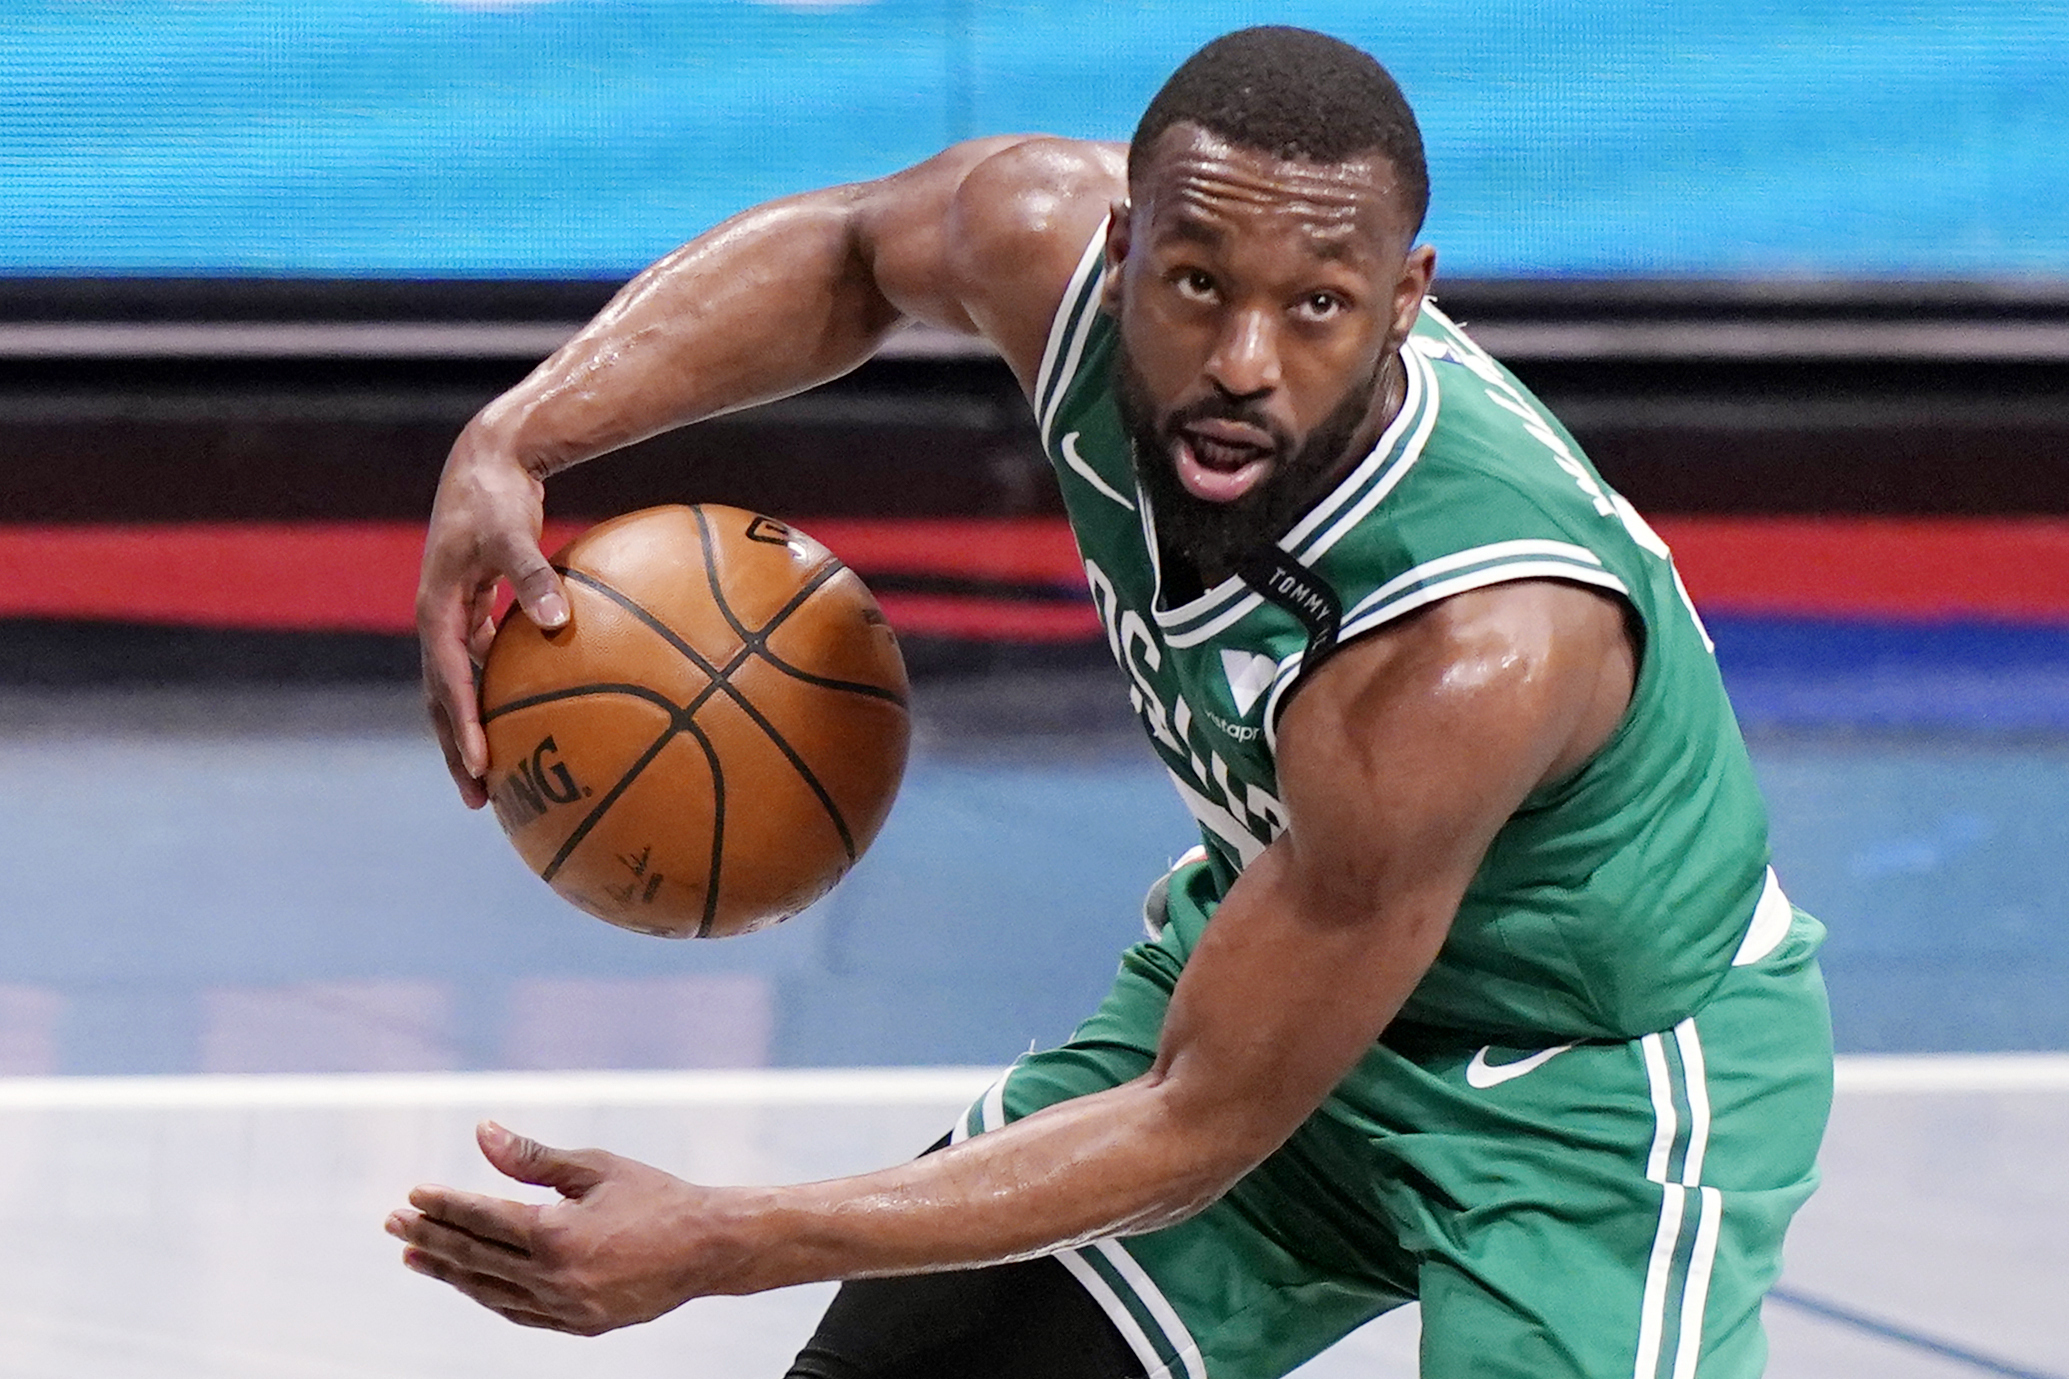 Boston Celtics trade Kemba Walker to Oklahoma City Thunder for Al Horford  and Moses Brown, NBA News